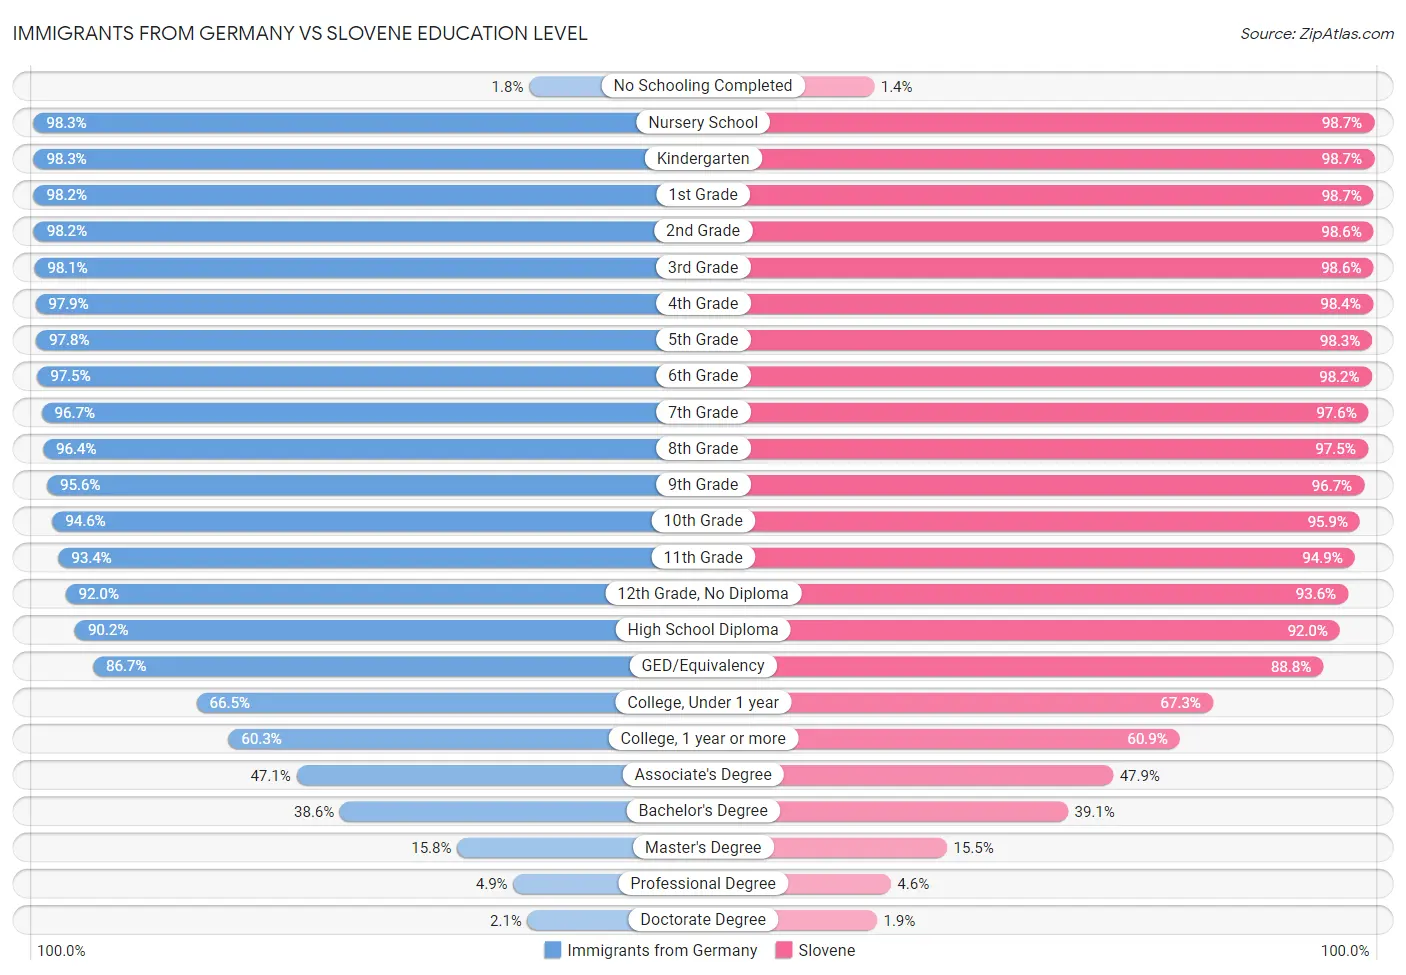 Immigrants from Germany vs Slovene Education Level